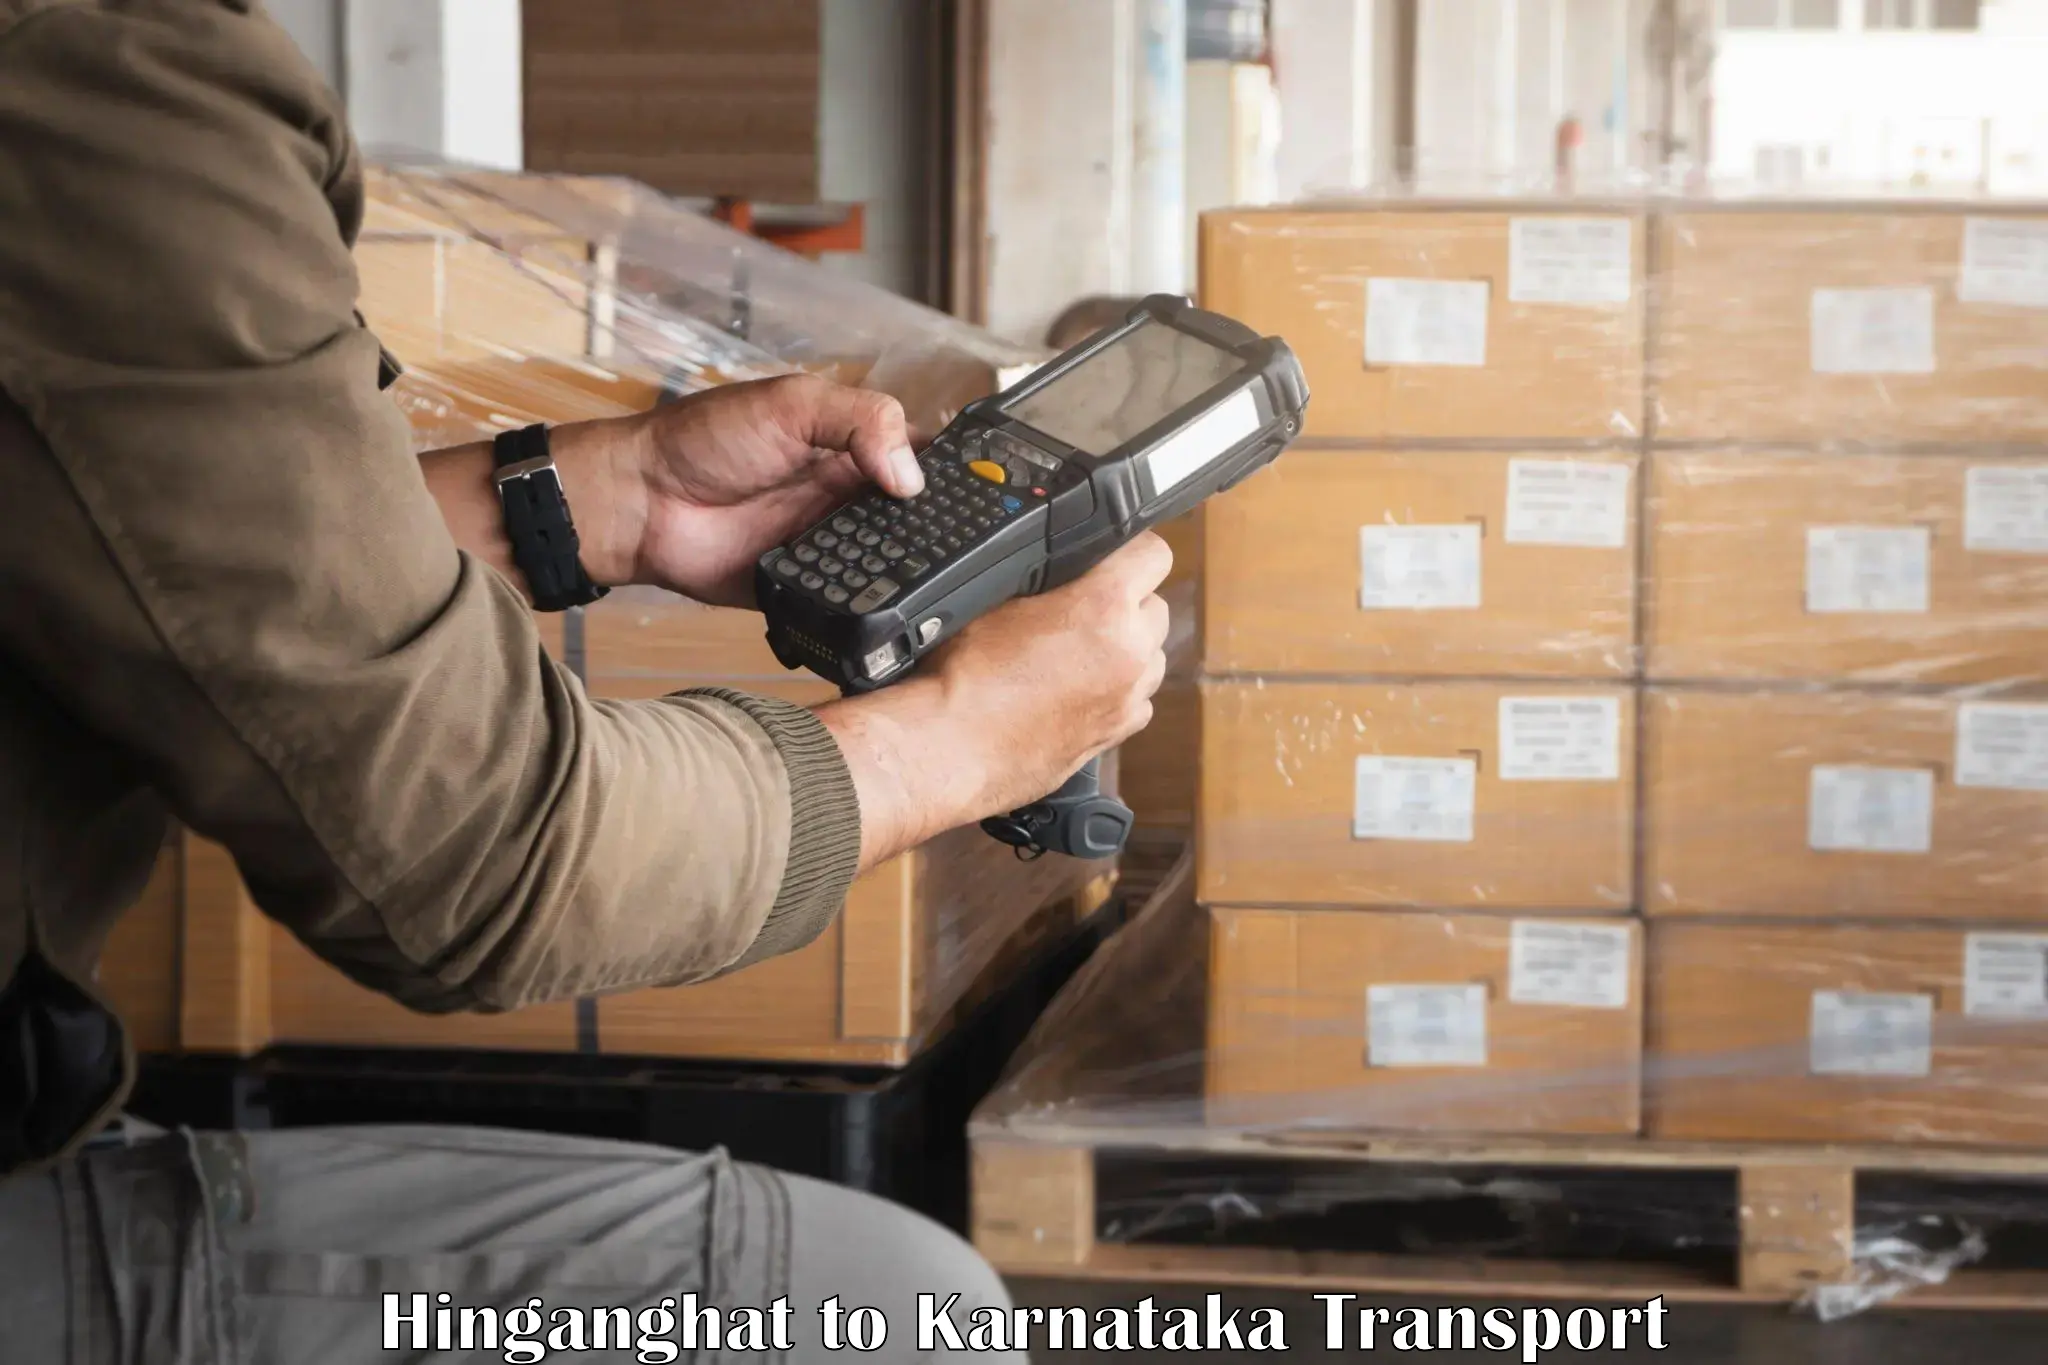 Goods delivery service Hinganghat to Kanjarakatte